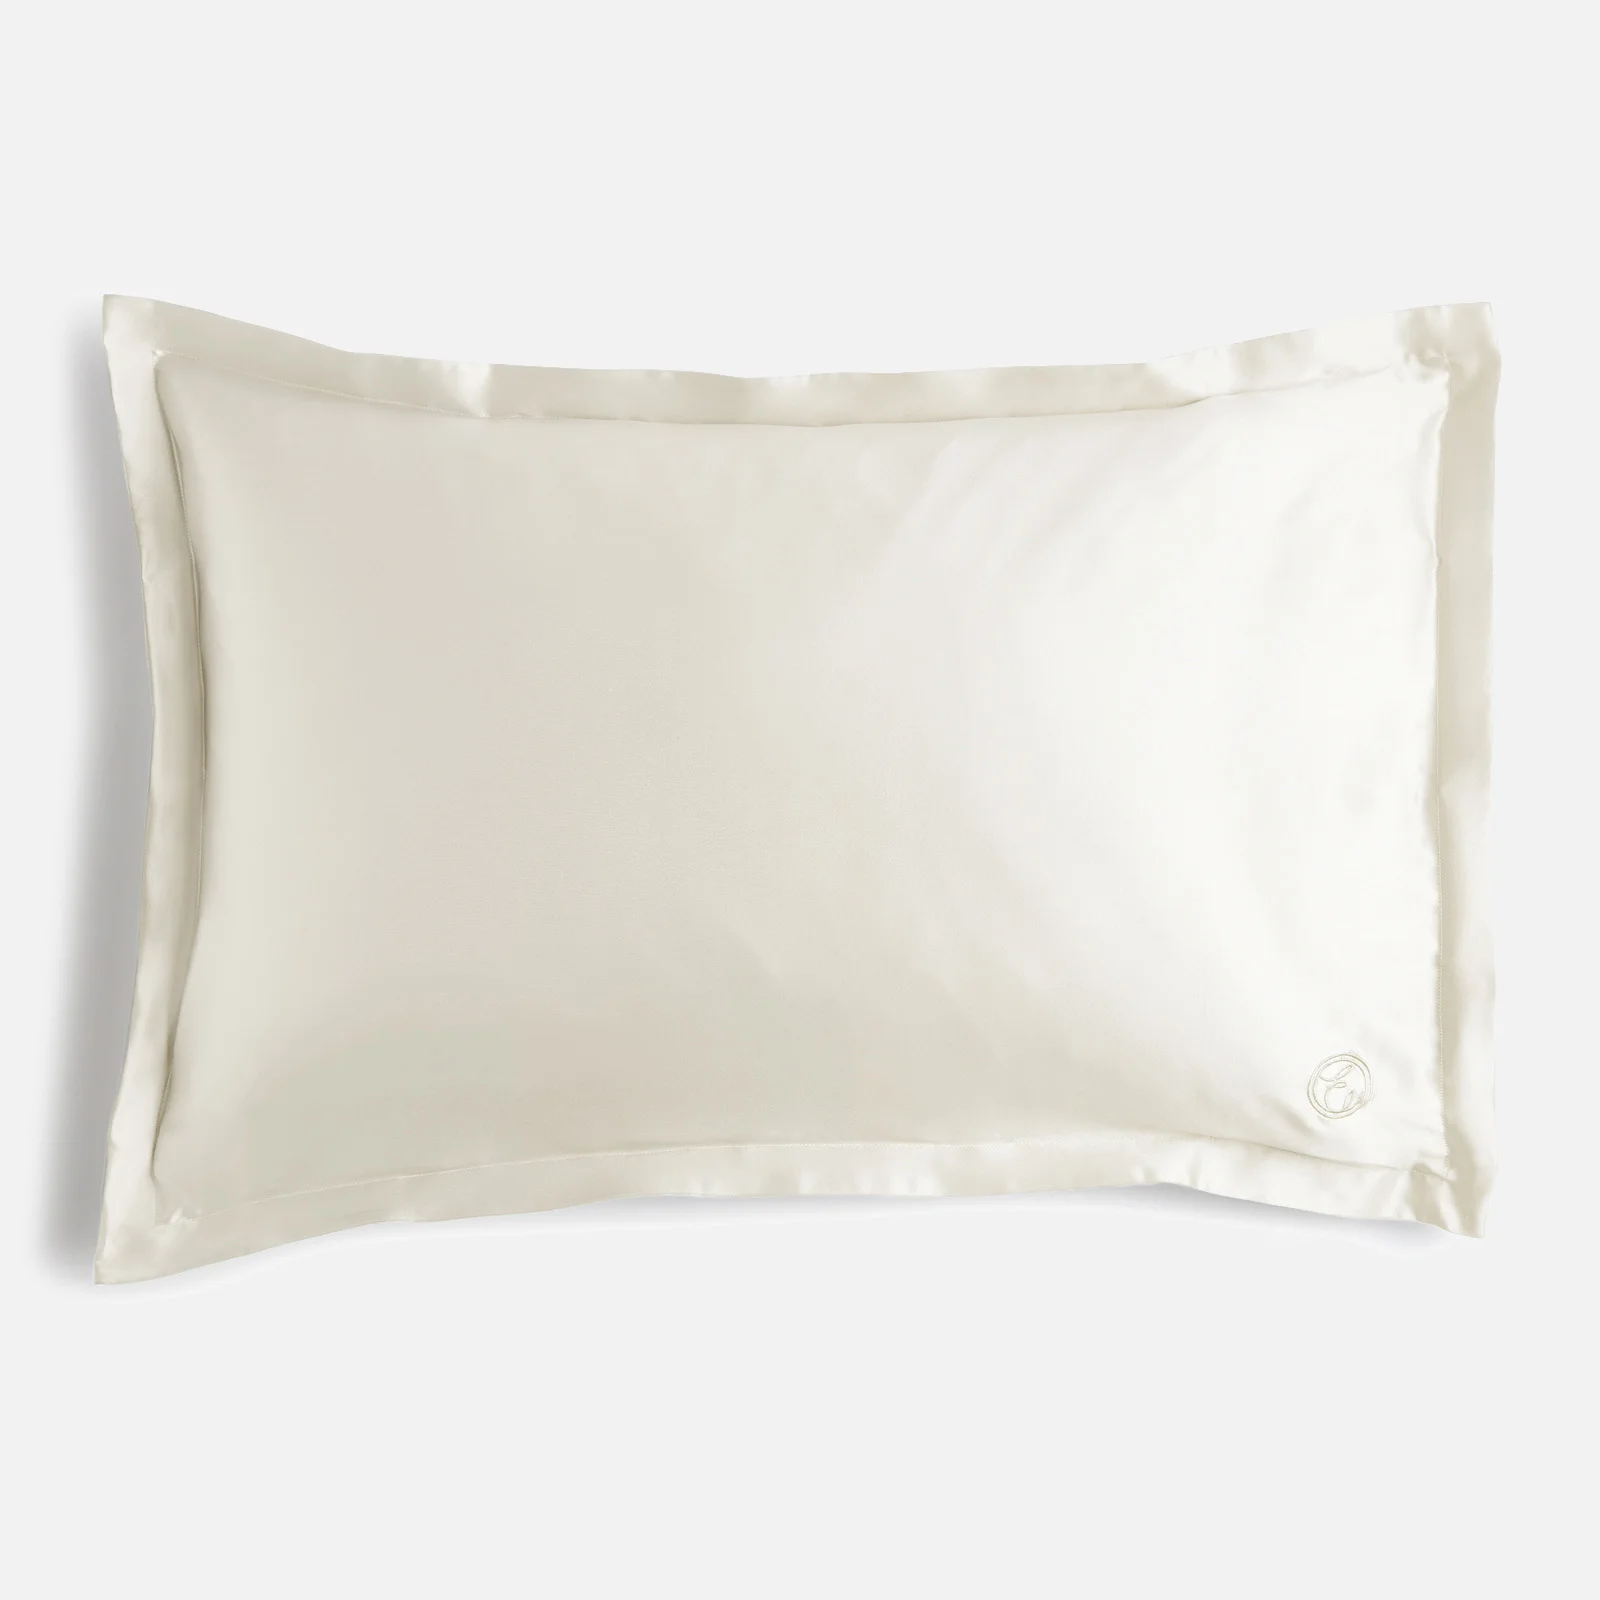 ESPA Home Oxford Edge Silk Pillowcase - Pearl White Image 1